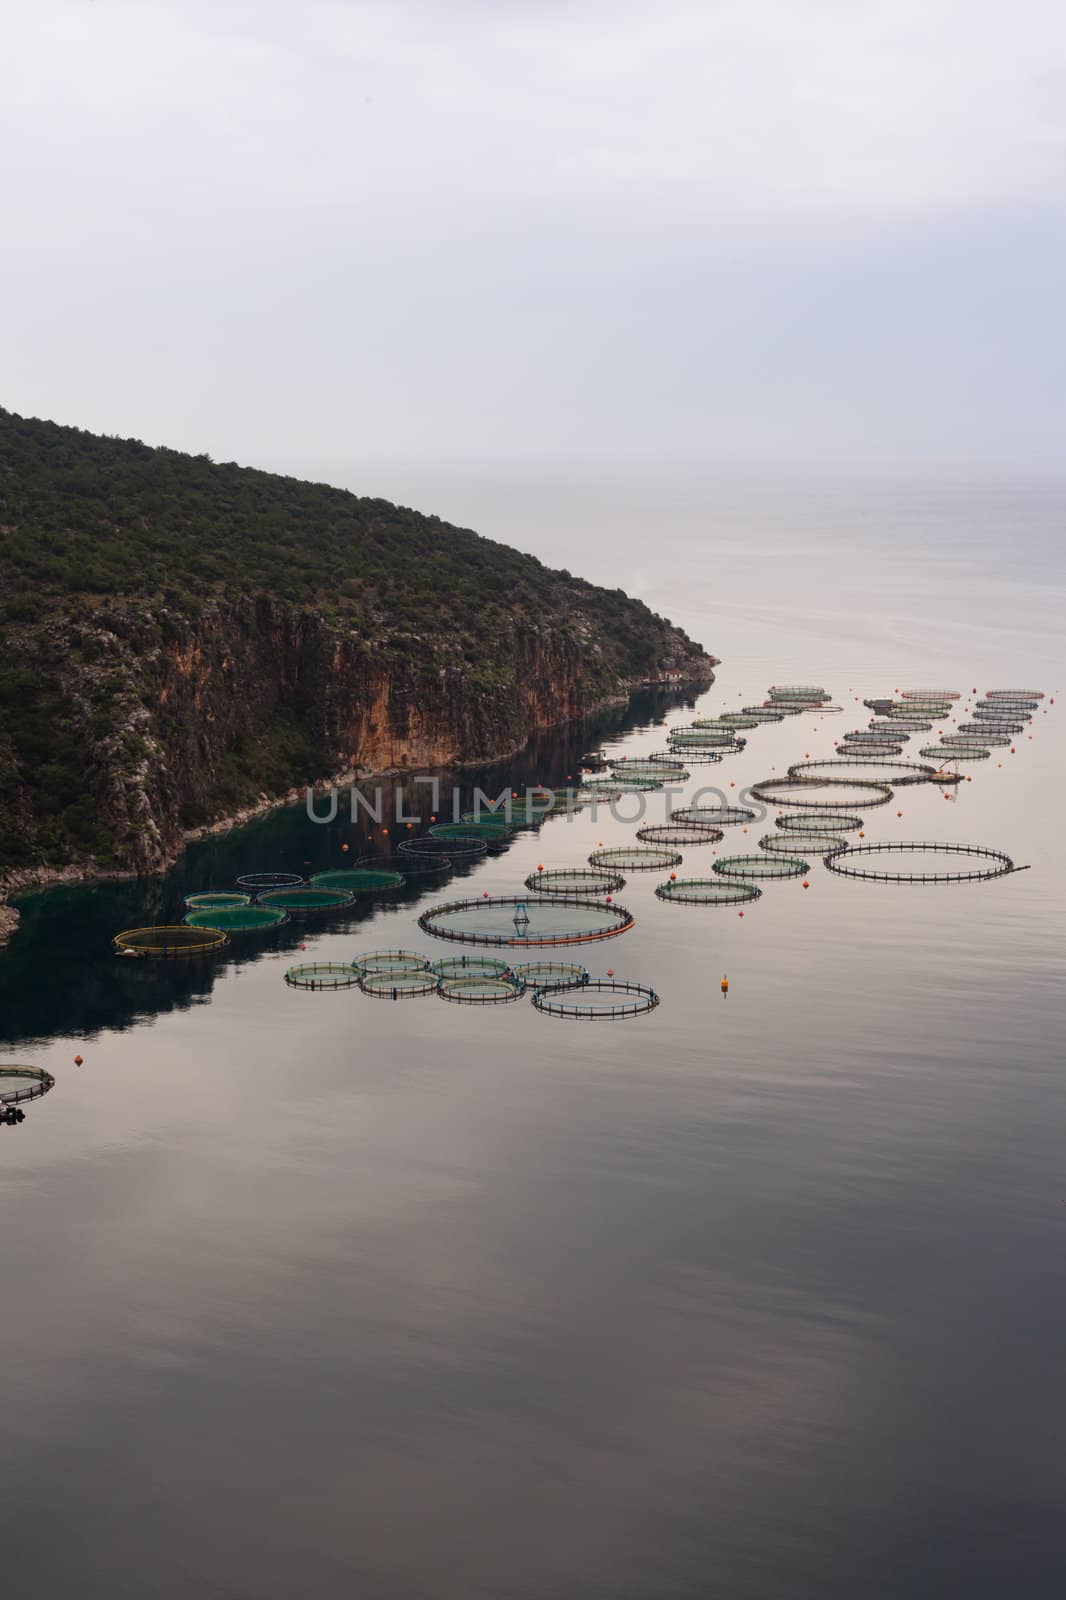 Aquaculture in calm bay offshore Peleponnes island, Greece, Europe.